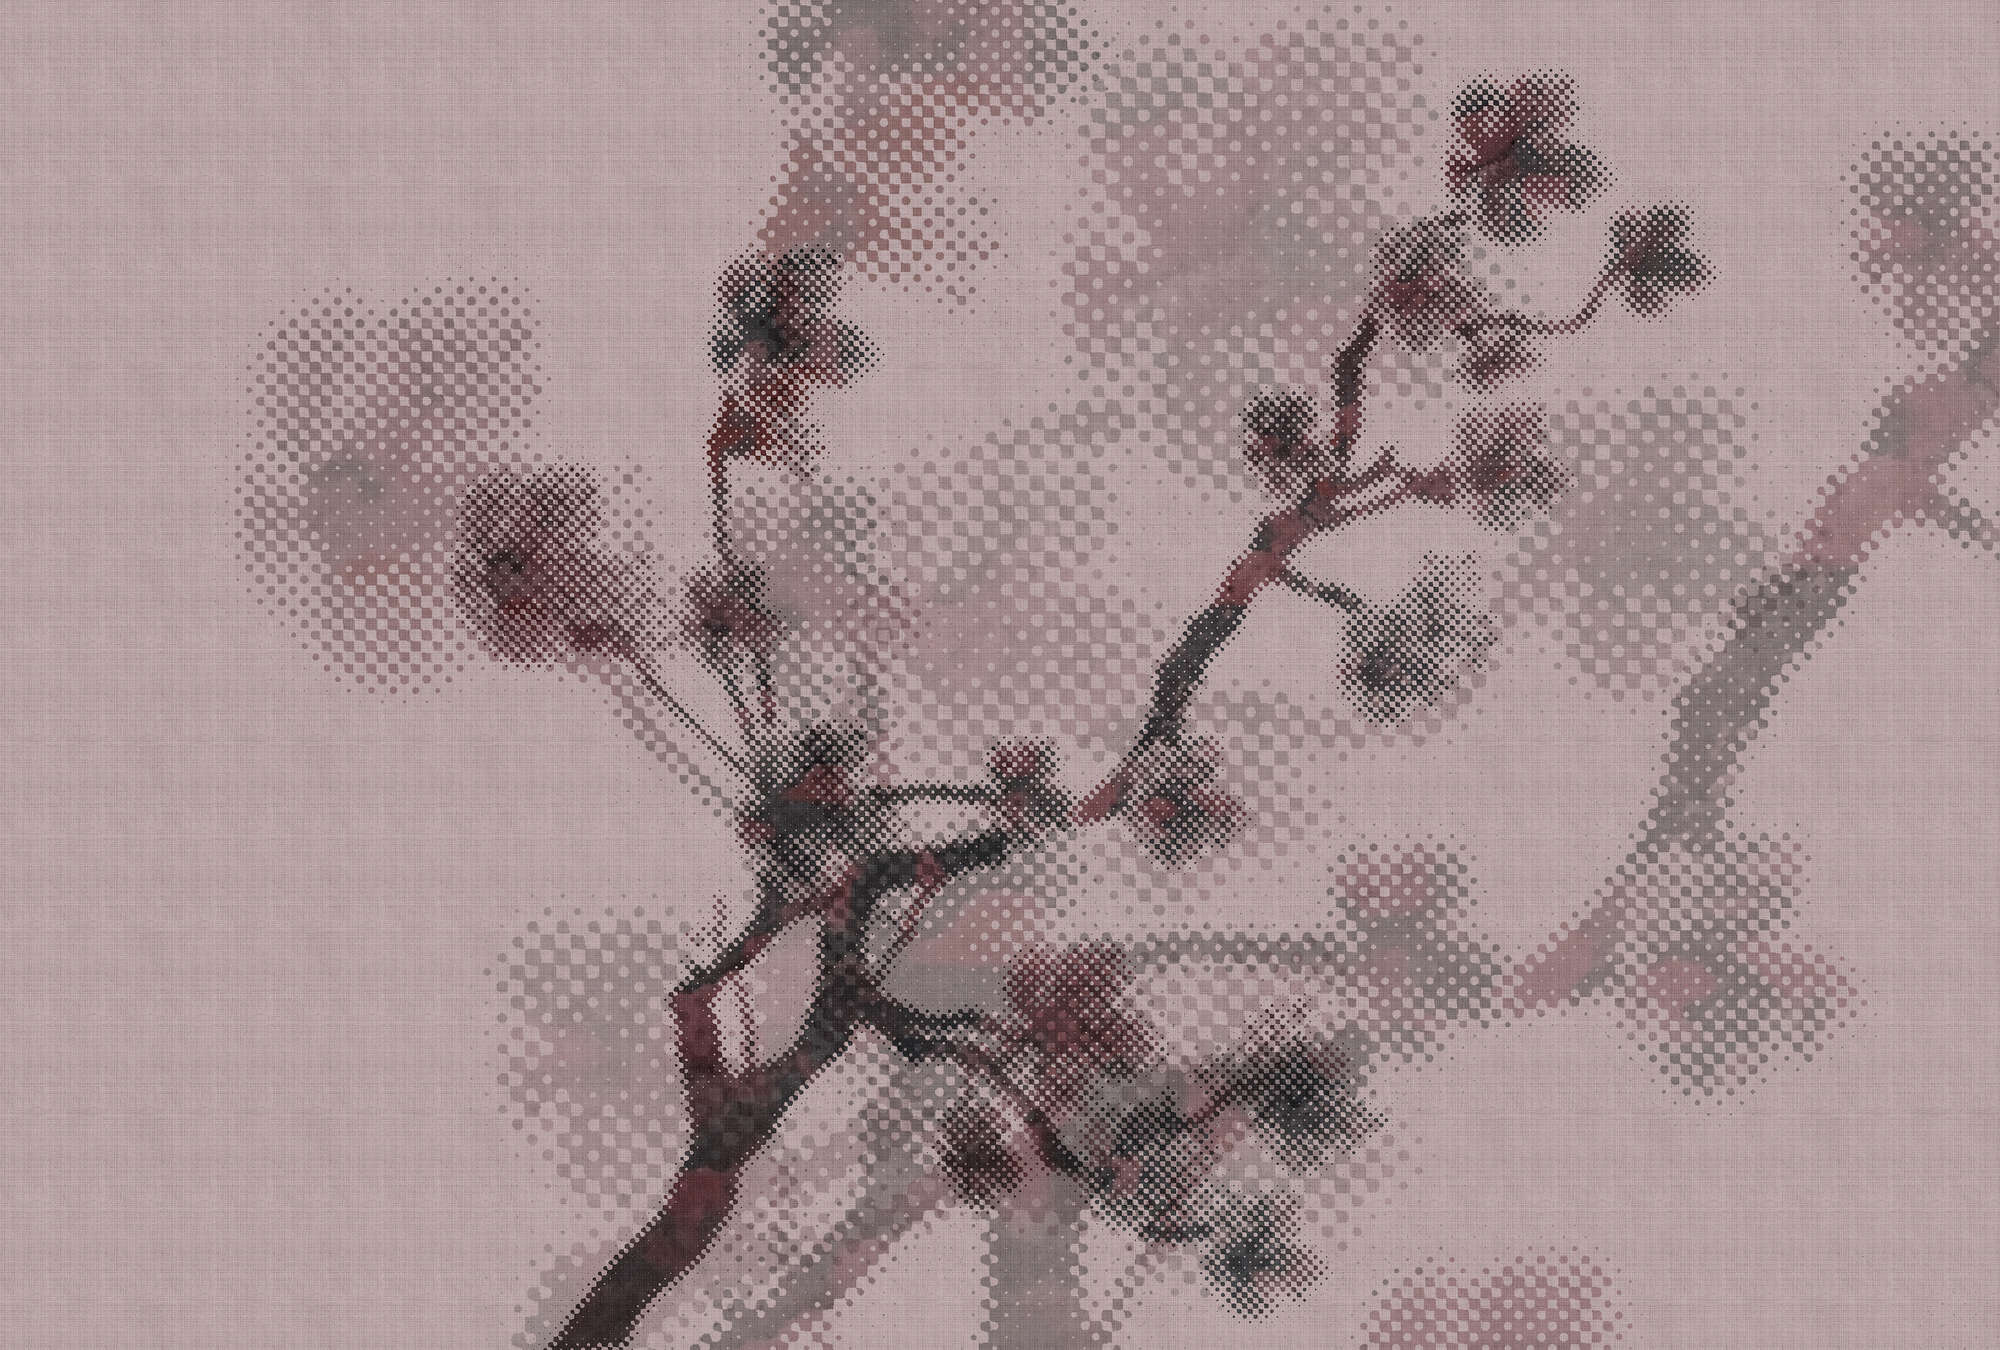             Twigs 3 - Fototapete mit Natur- Motiv & Pixeldesign - naturleinen Struktur – Rosa | Struktur Vlies
        